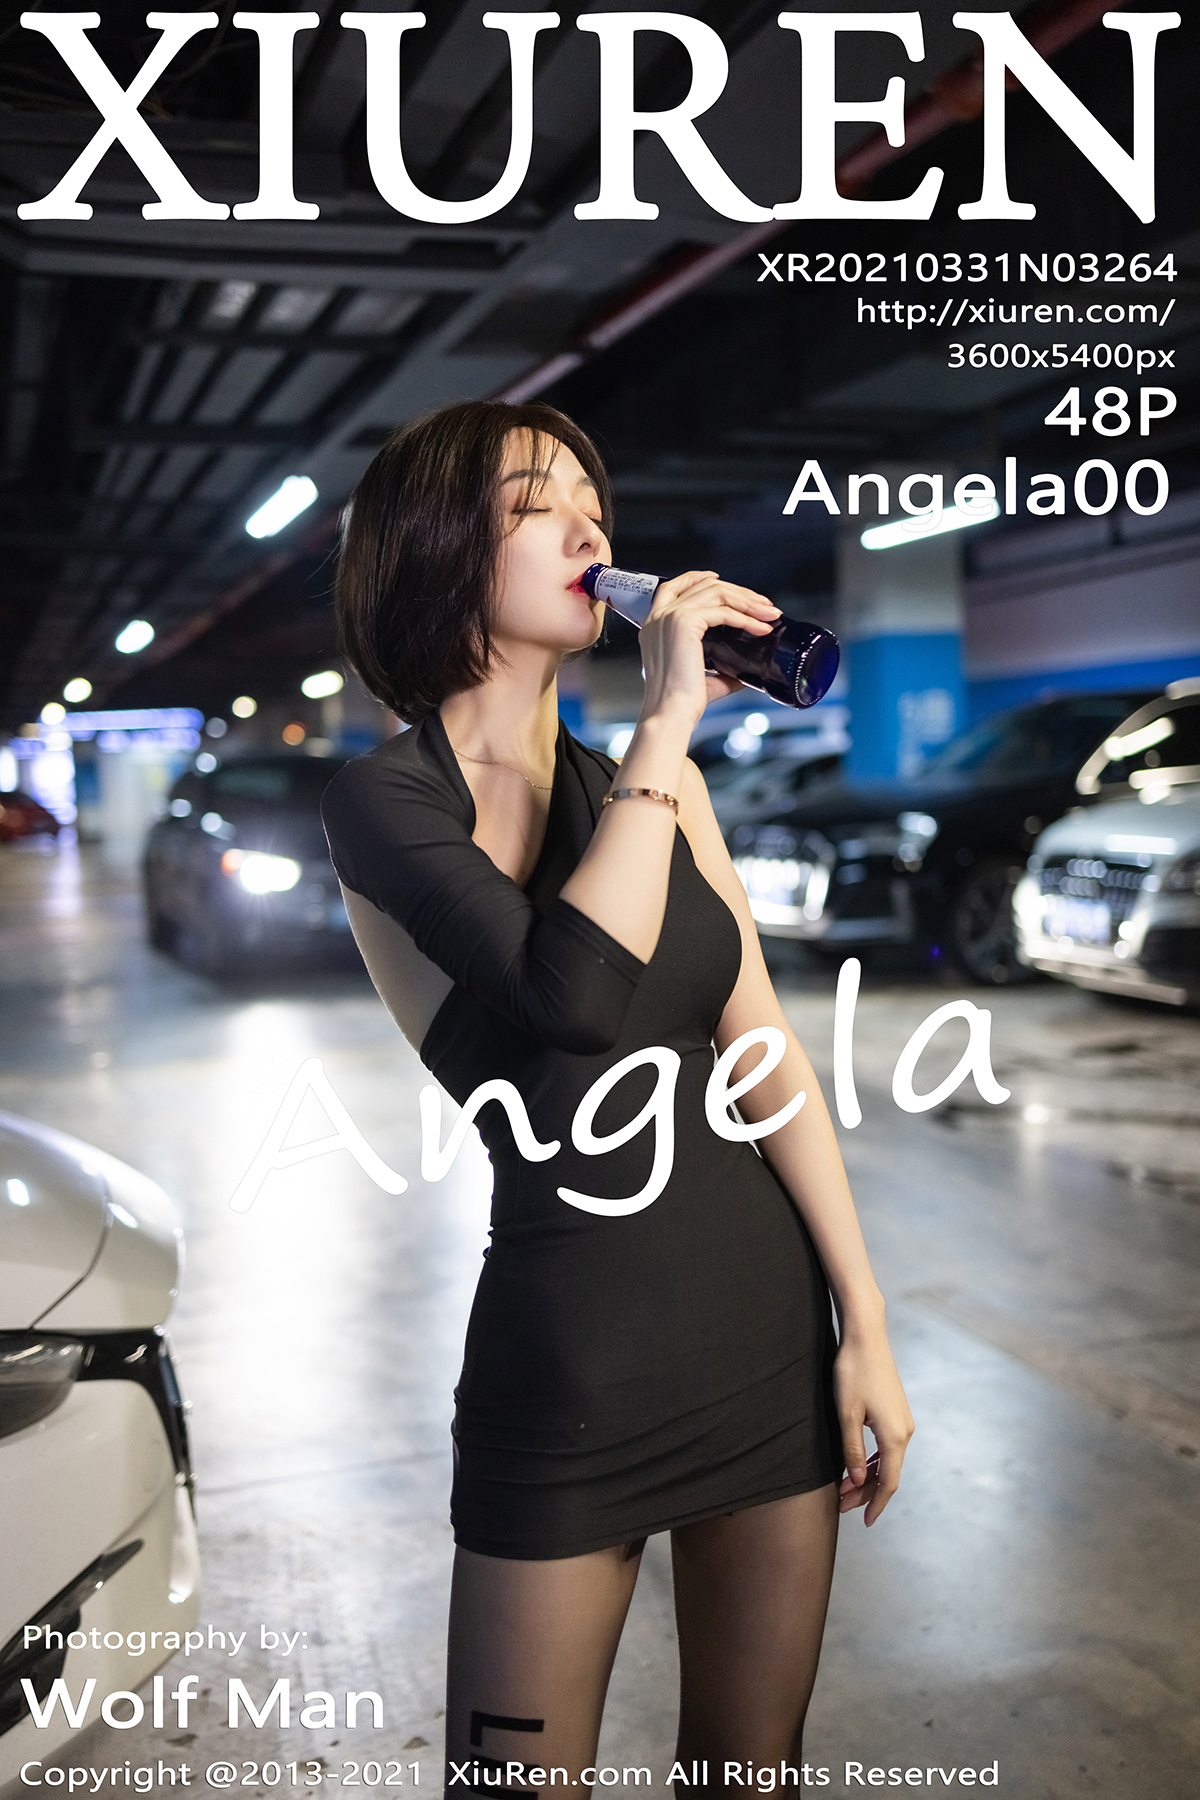 [XIUREN] 2021.03.31 Angela00